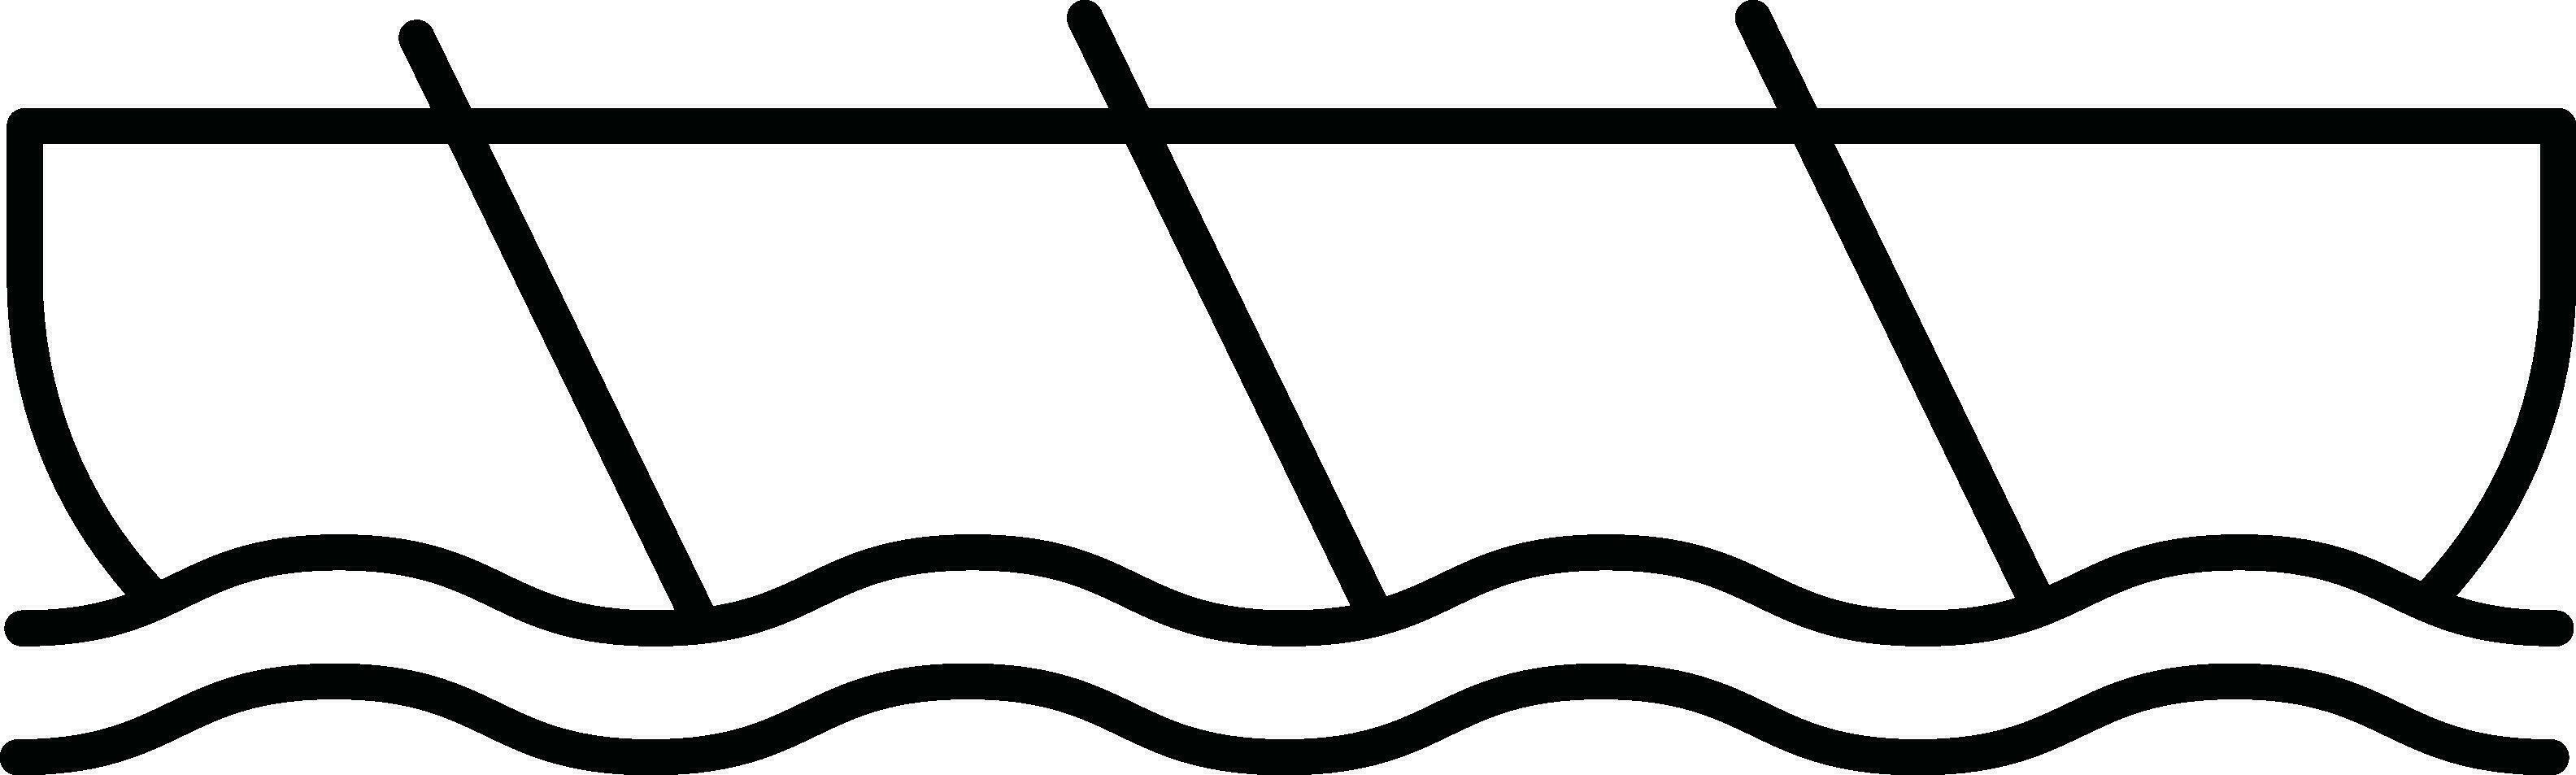 Black Line Art Of Snake Boat Icon Or Symbol. vector